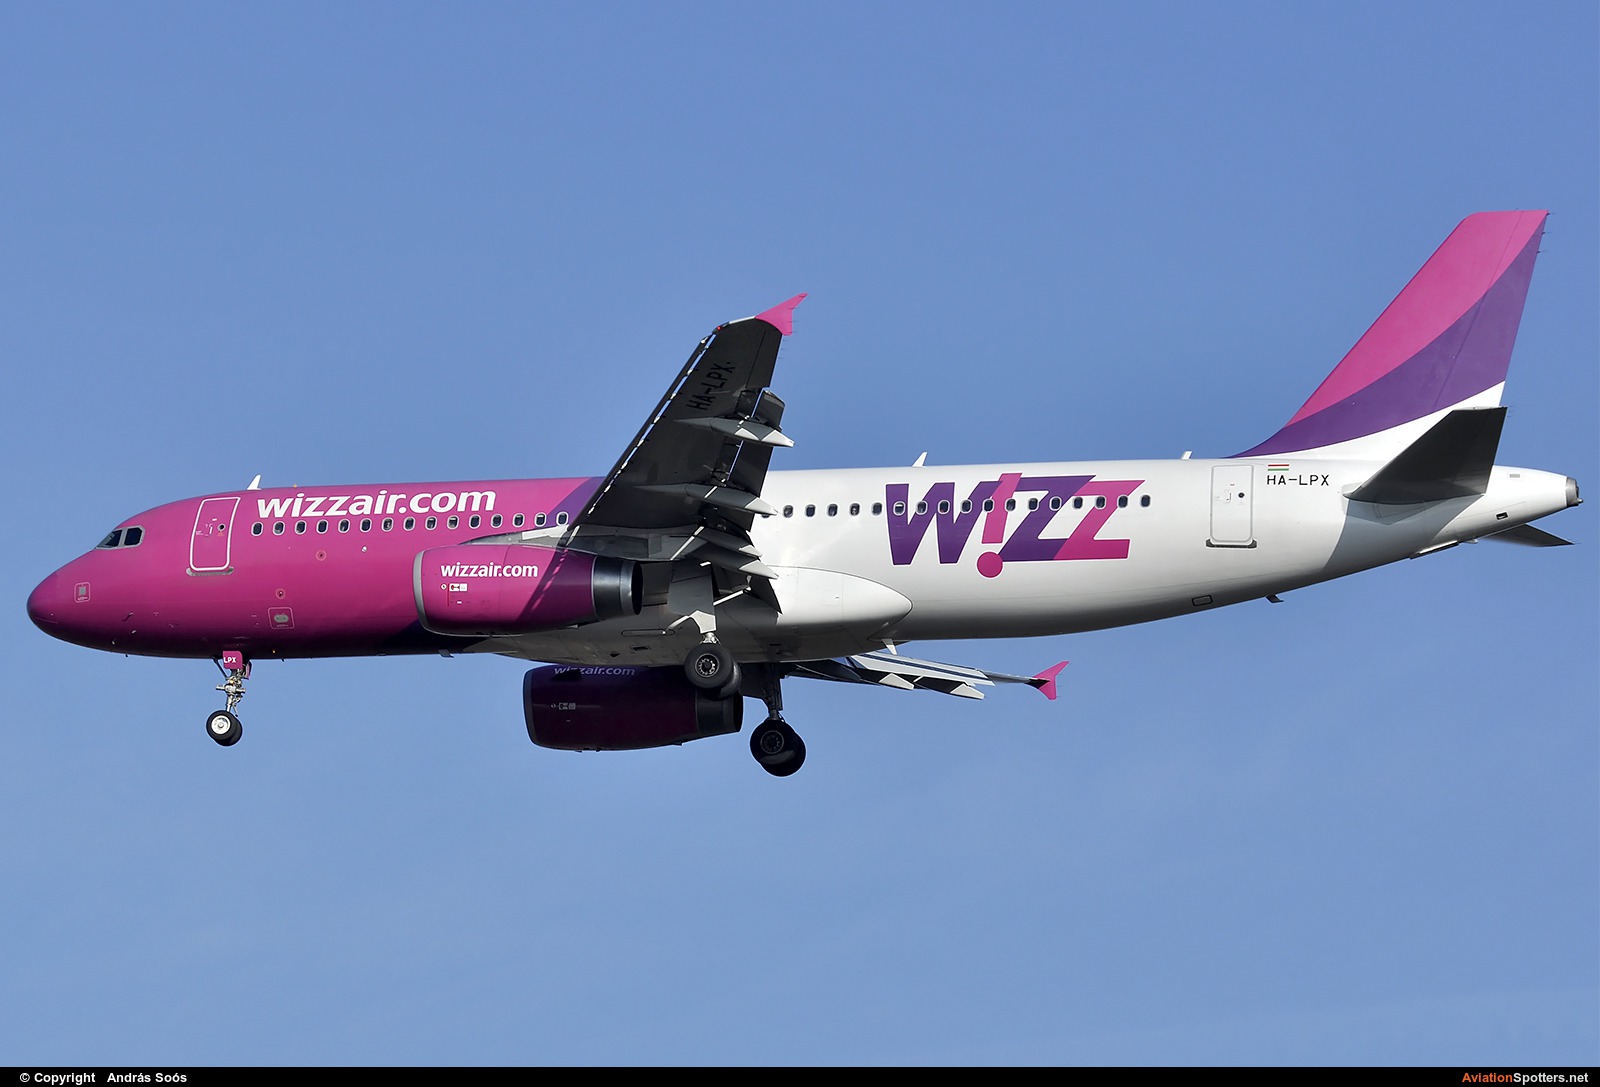 Wizz Air  -  A320  (HA-LPX) By András Soós (sas1965)